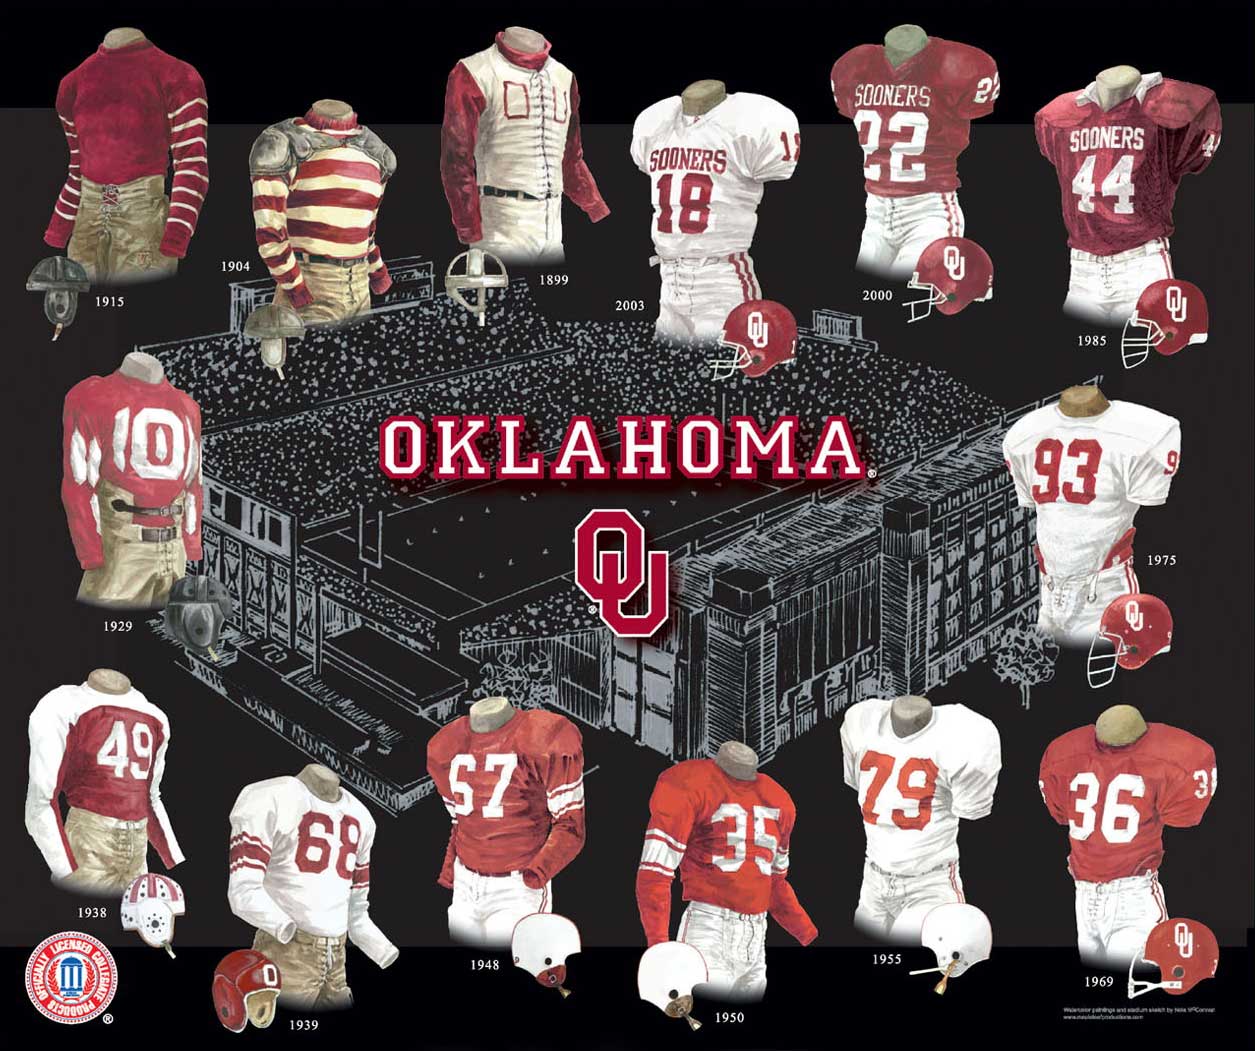 Heritage Uniforms And Jerseys Nfl Mlb Nhl Nba Ncaa Us Colleges University Of Oklahoma Sooners Football Uniform And Team History